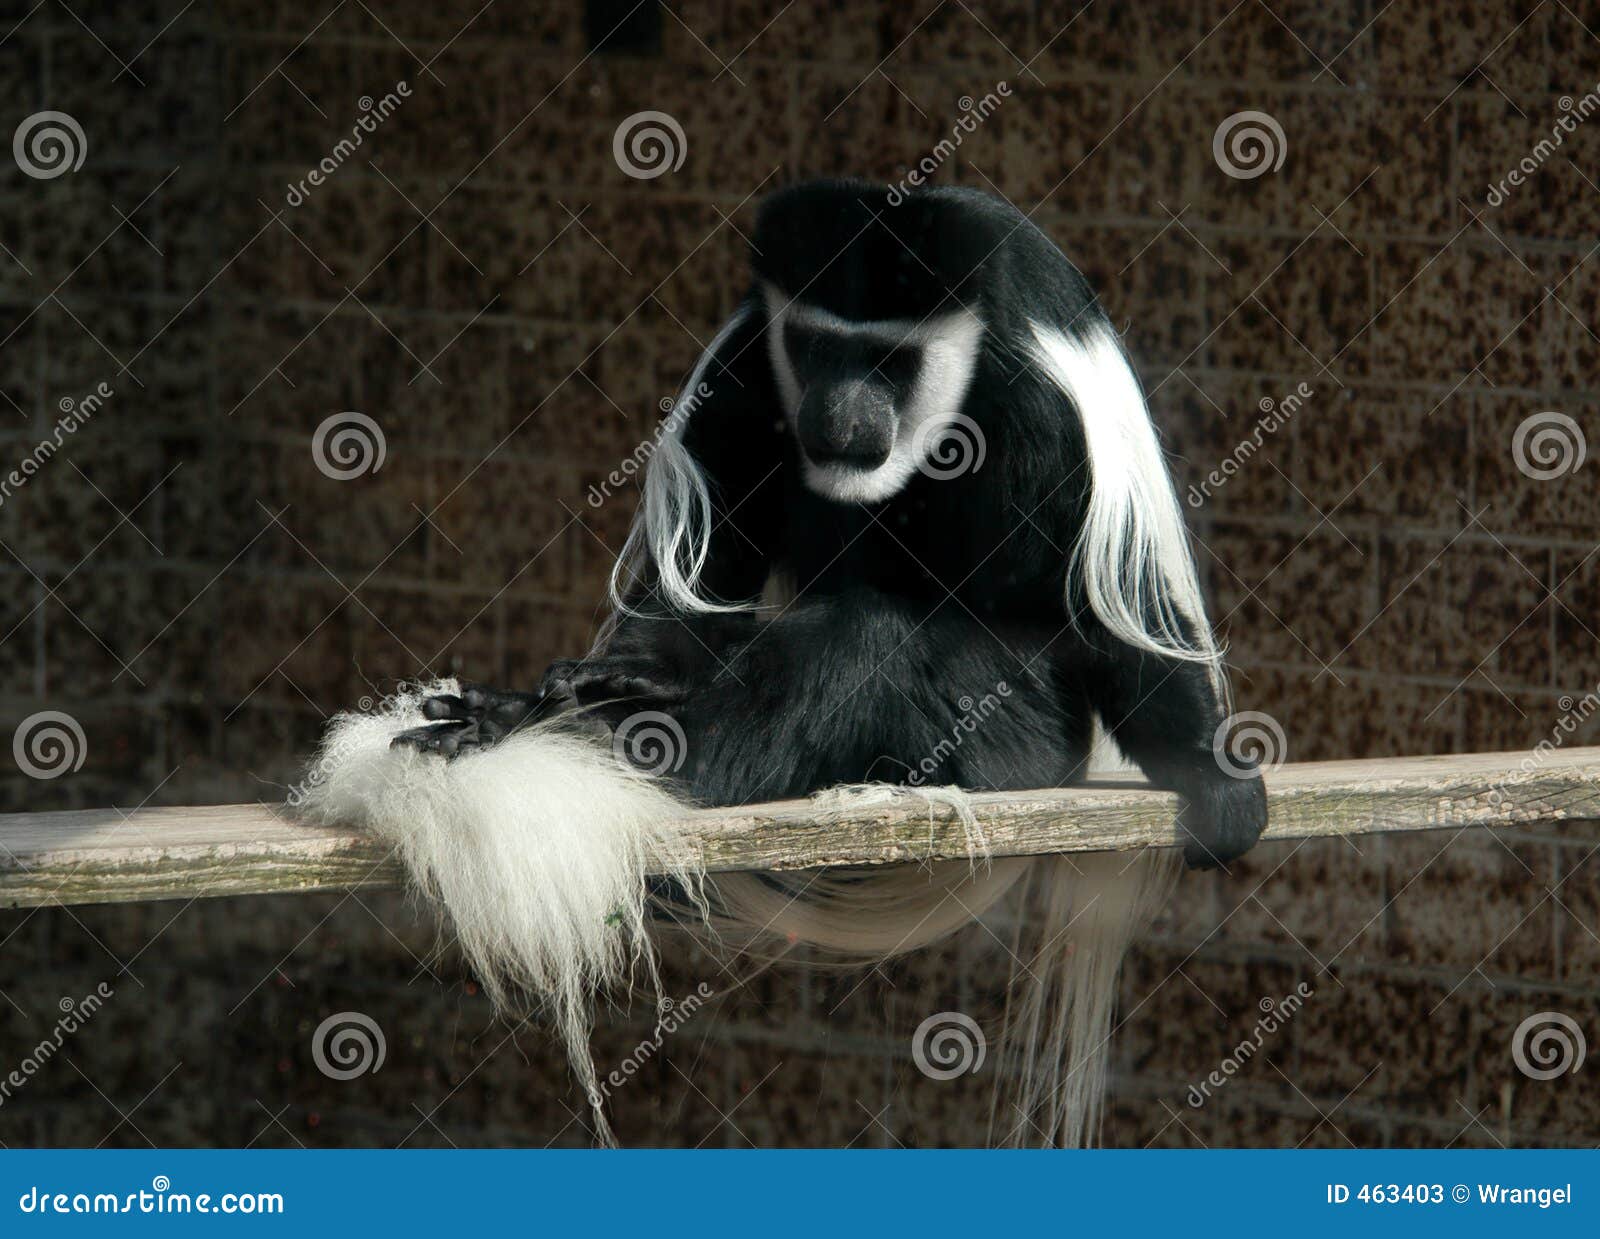 black-and-white colobus